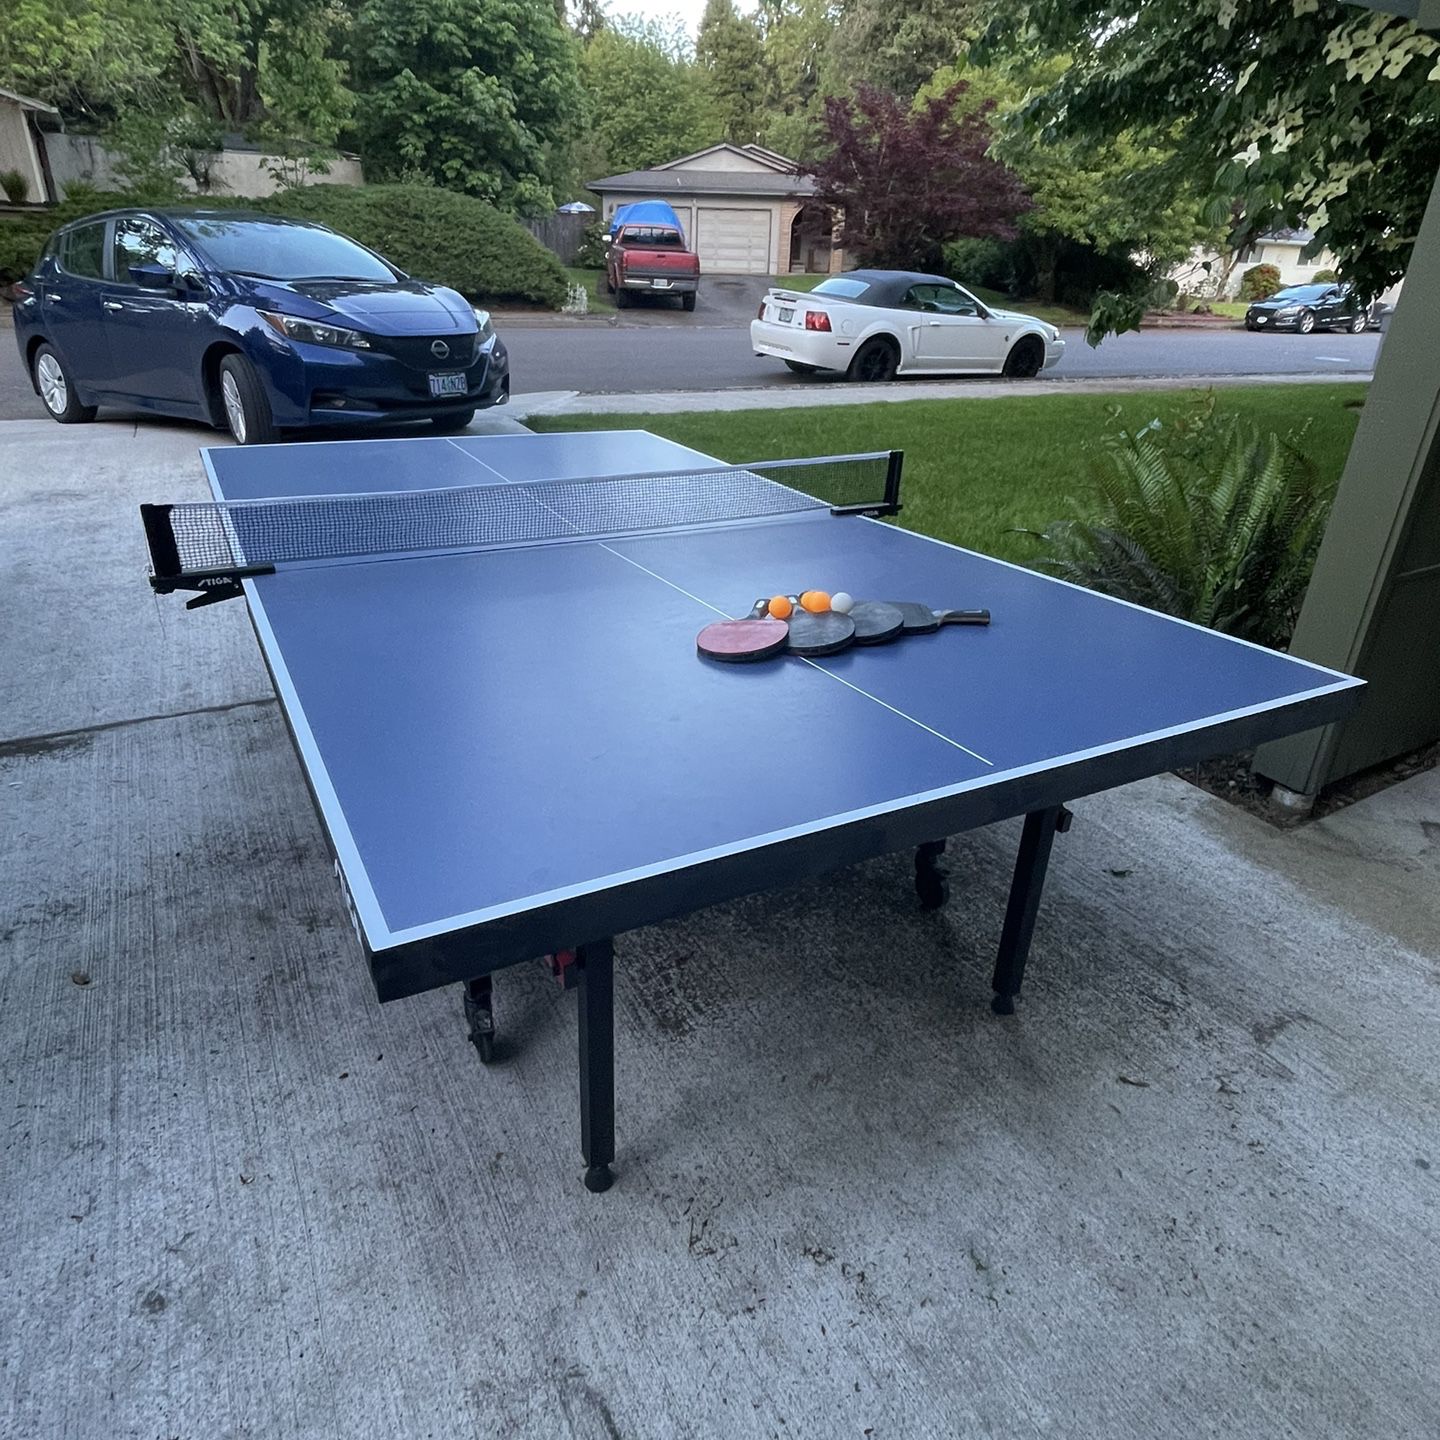 Ping Pong table